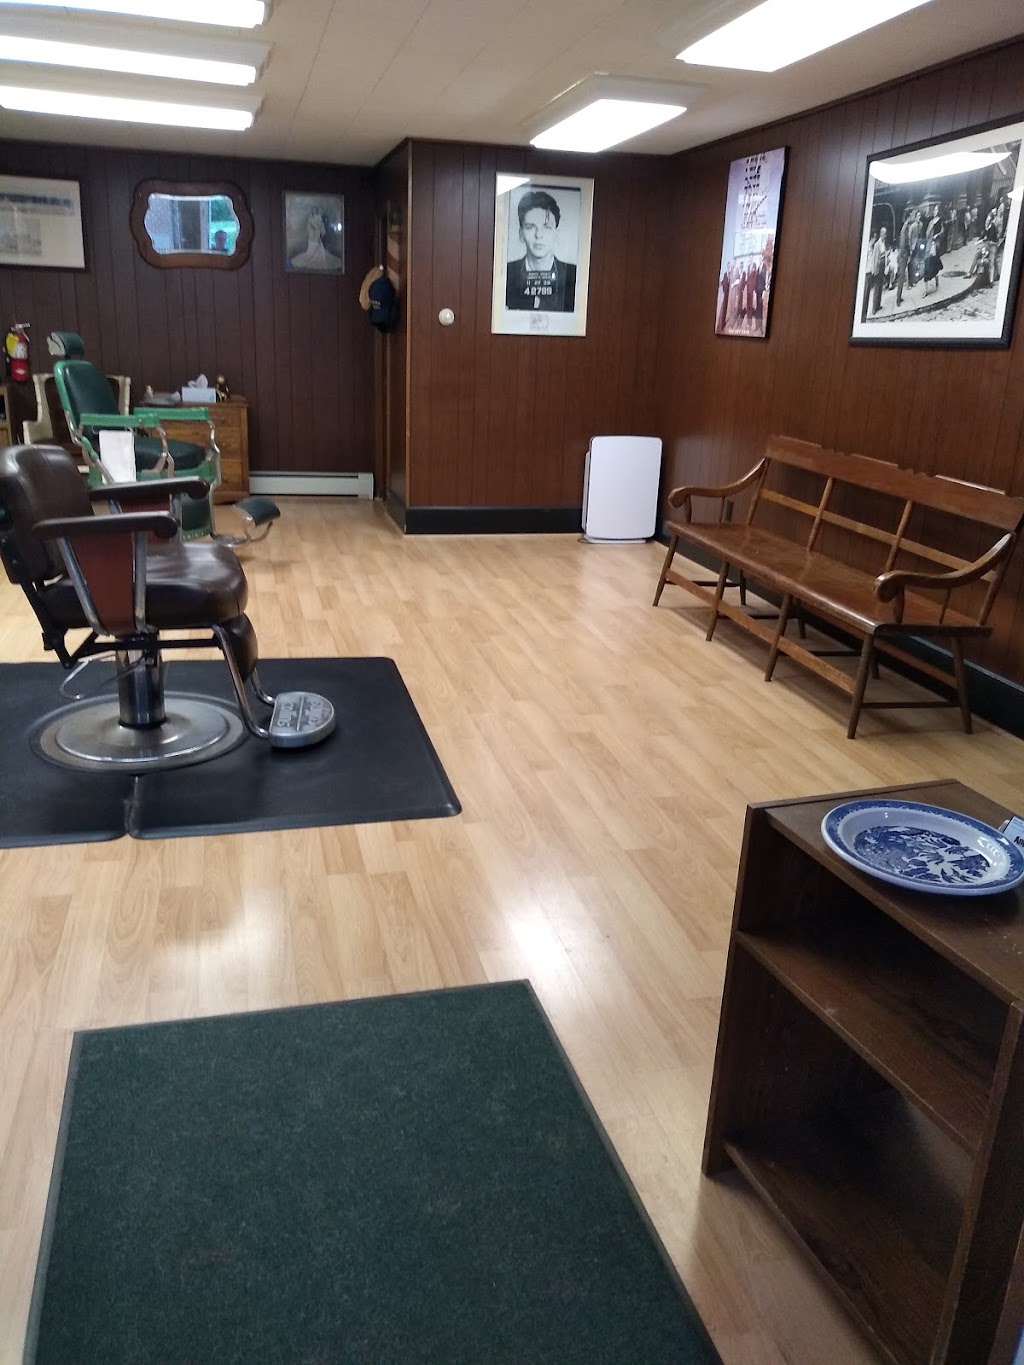 Angellos Barber Shop | 57 S Reading Ave, Boyertown, PA 19512, USA | Phone: (610) 473-7722